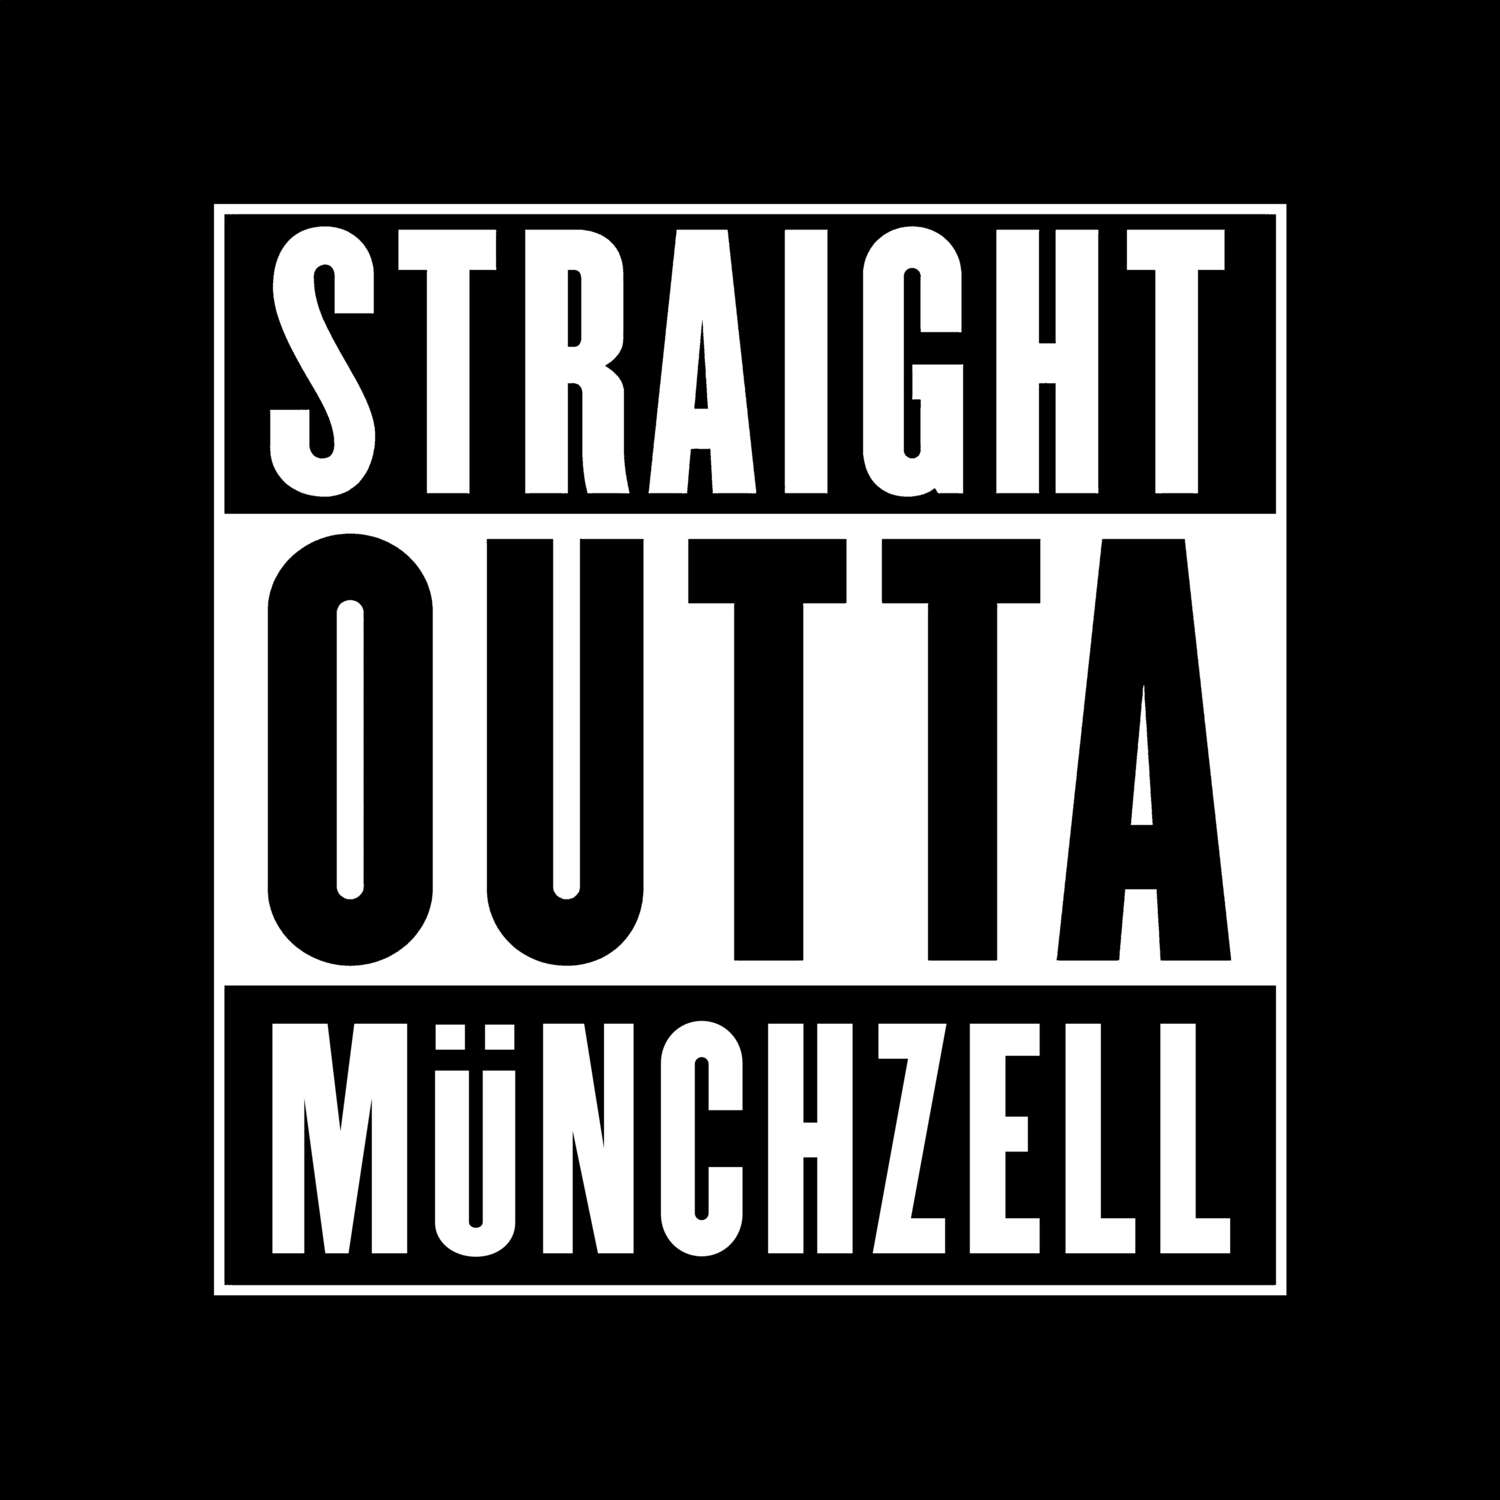 Münchzell T-Shirt »Straight Outta«